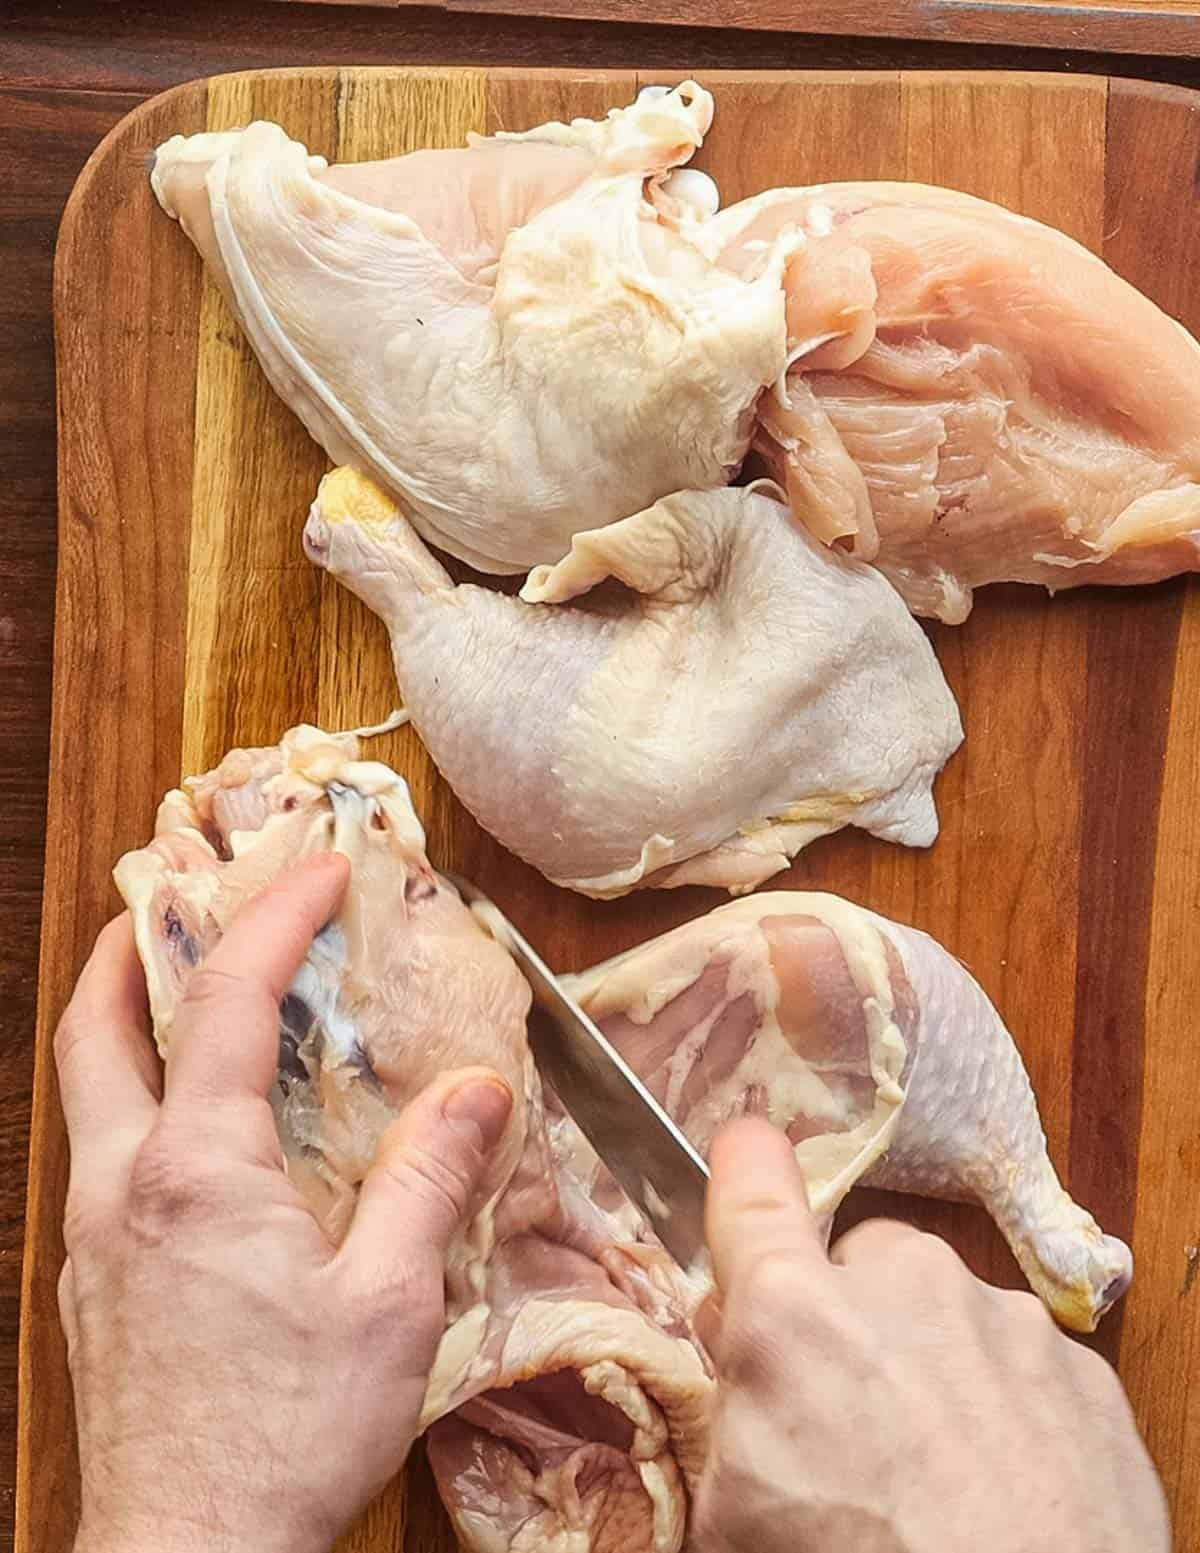 Cutting up a chicken to make chicken broth for ramen. 